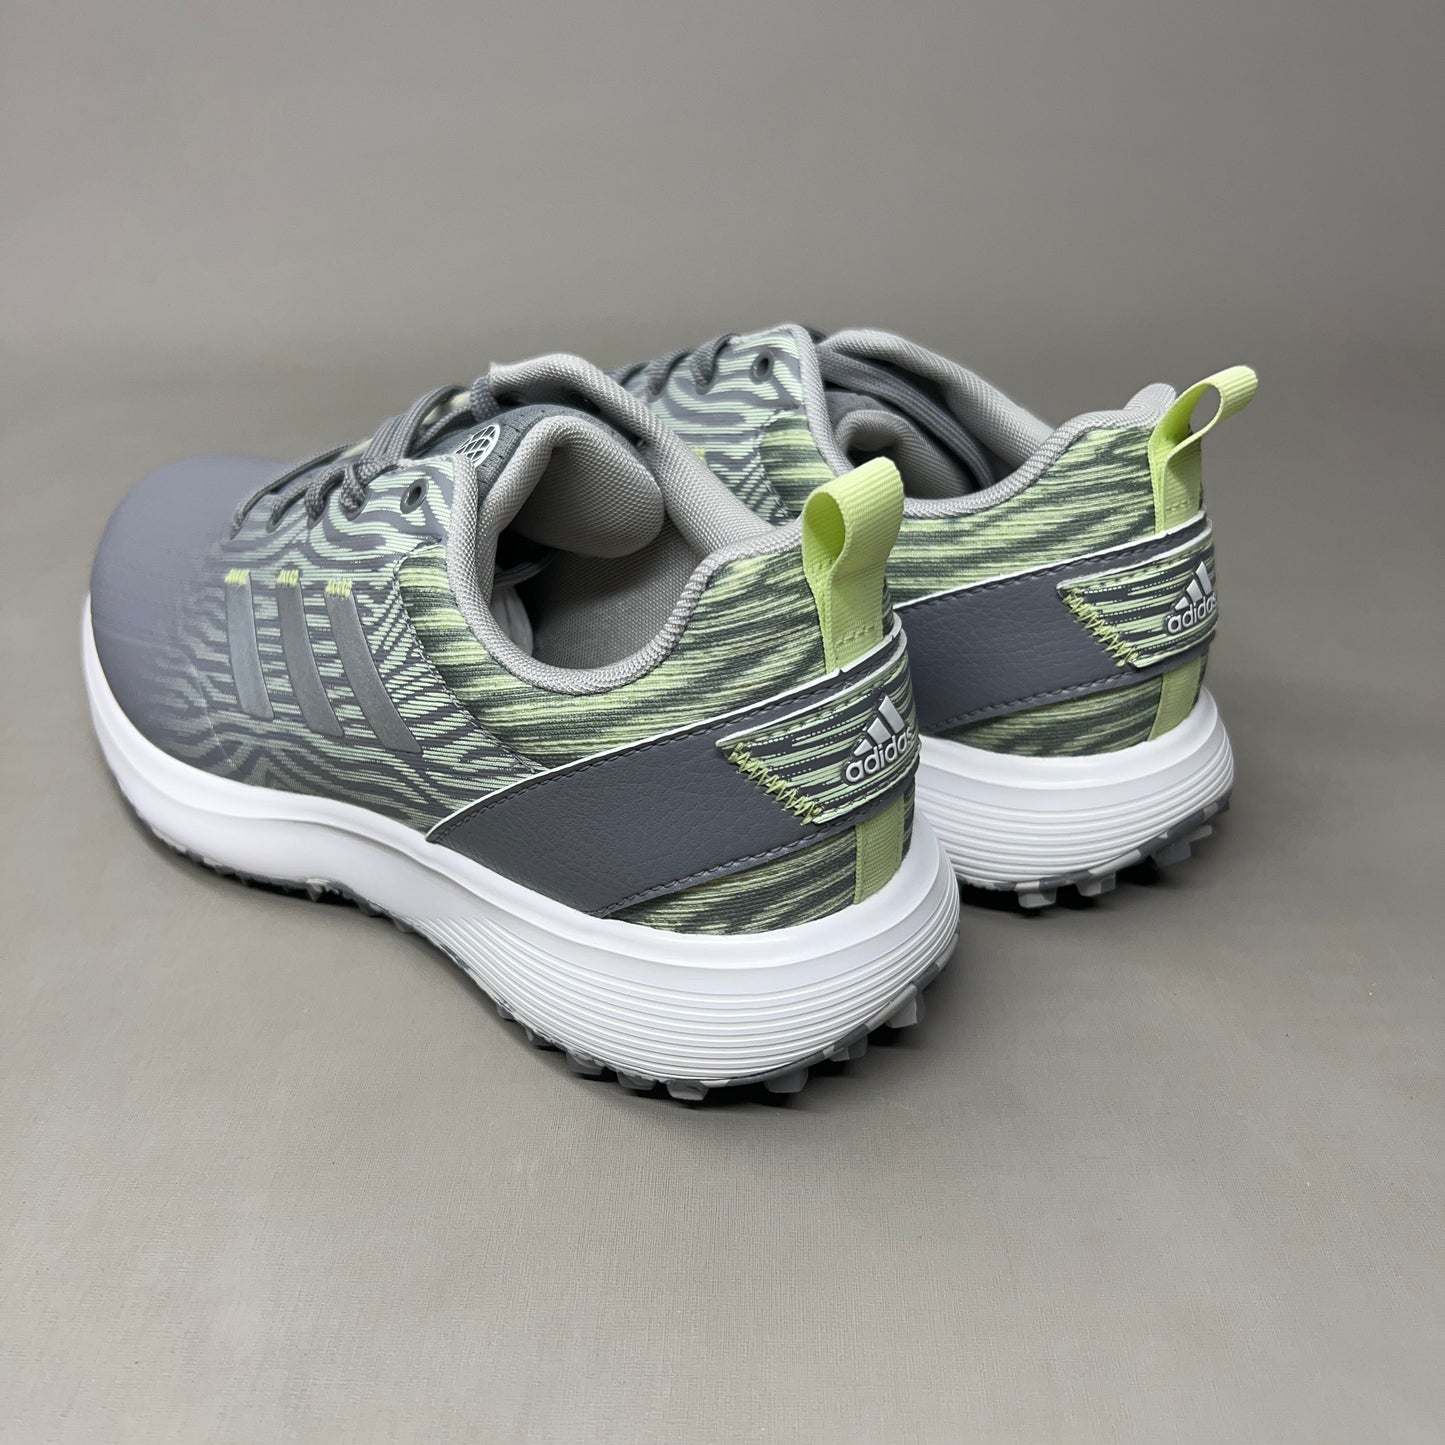 ADIDAS Golf Shoes W S2G SL Waterproof Women's Sz 6 Grey / Lime GZ3911 (New)